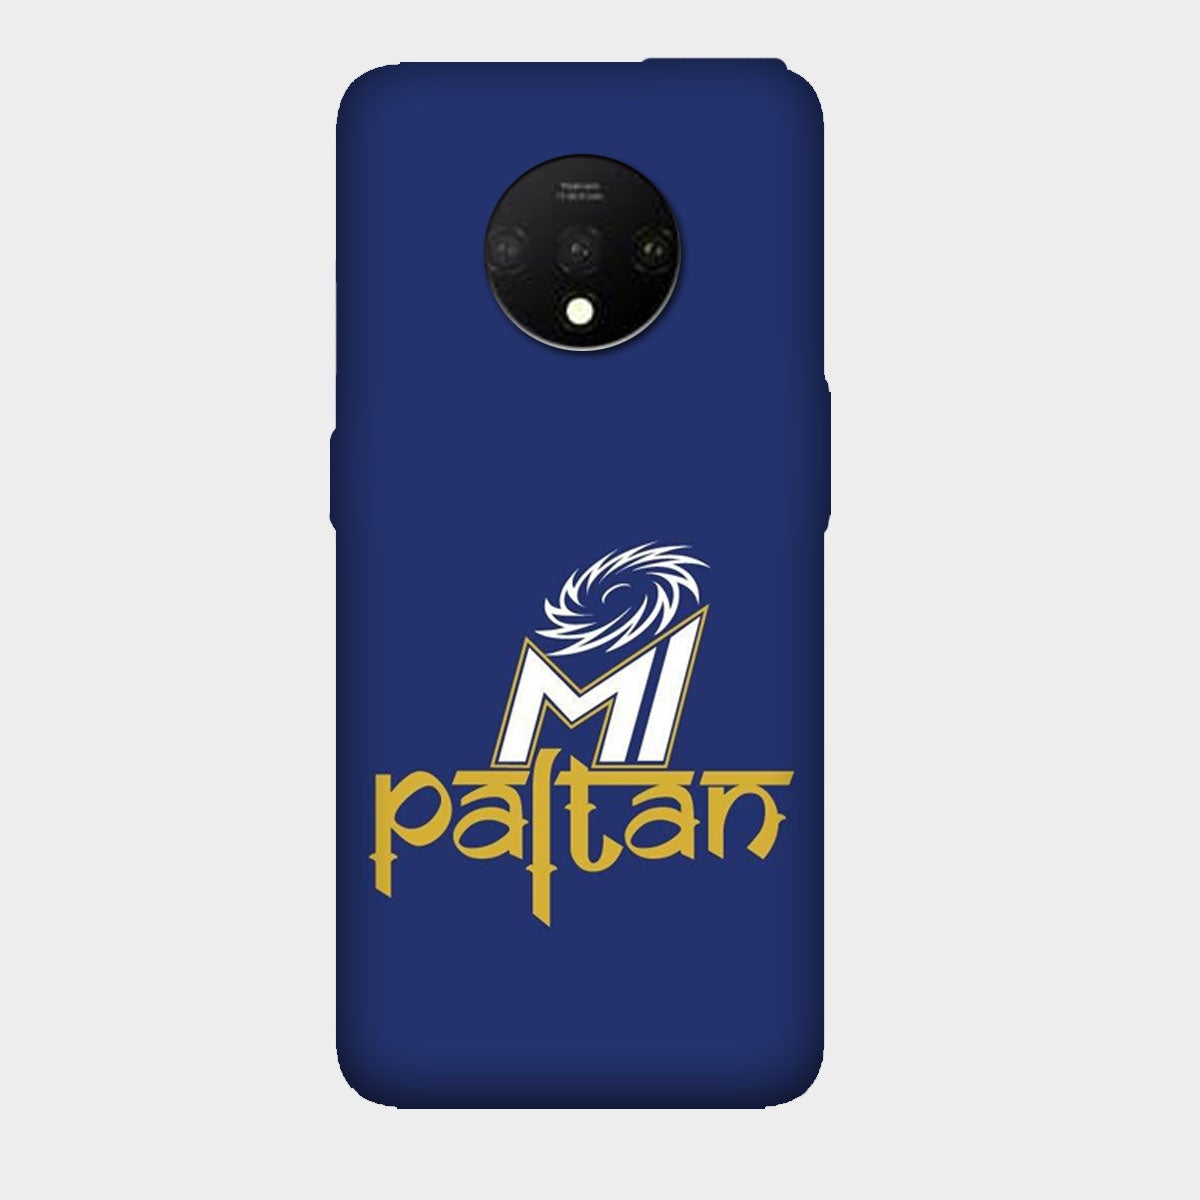 Mumbai Indians - MI Paltan - Mobile Phone Cover - Hard Case - OnePlus